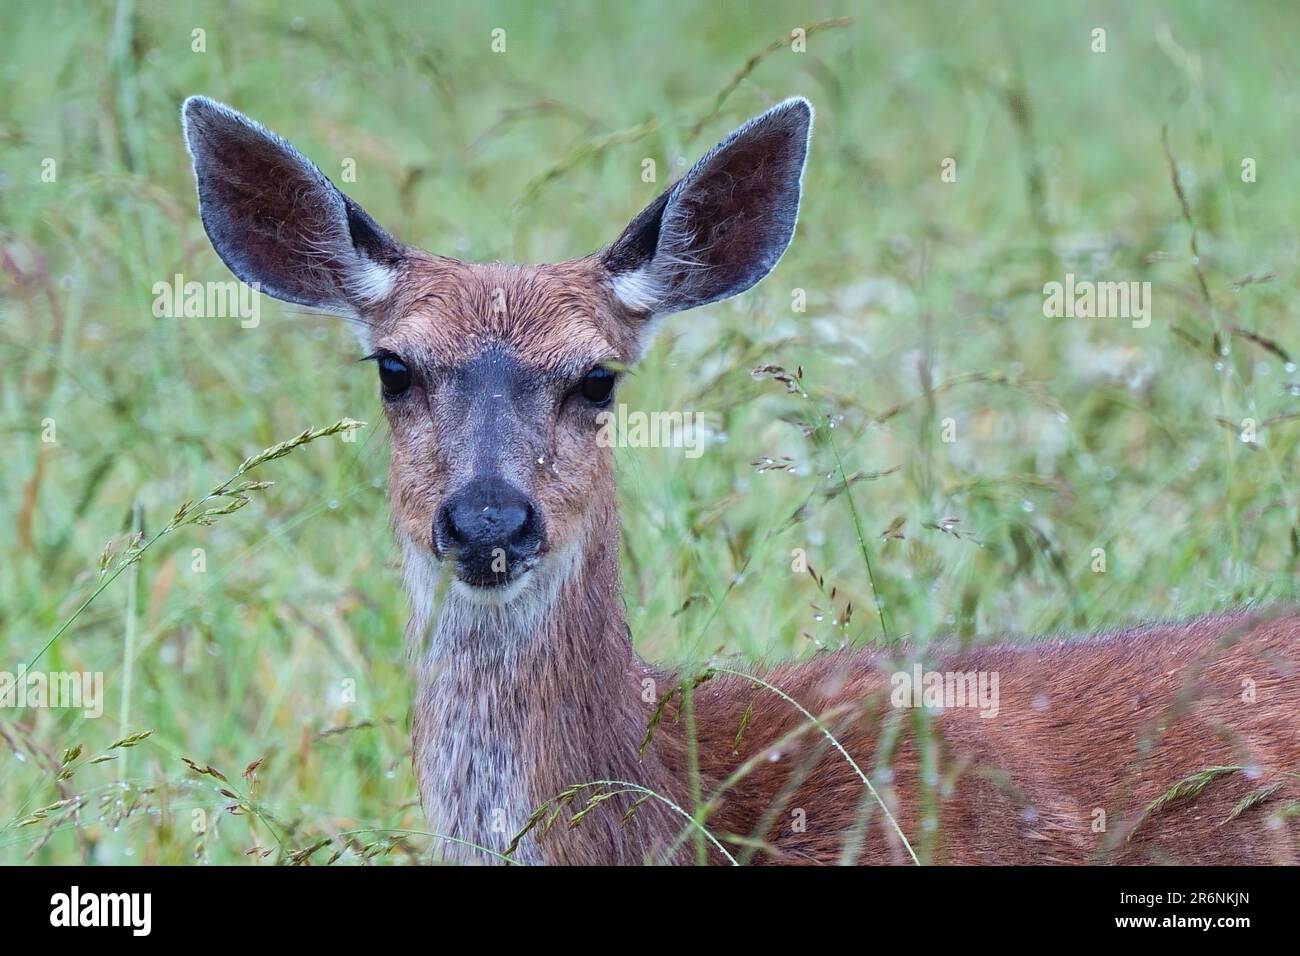 Deer in a grassy field Stock Photo